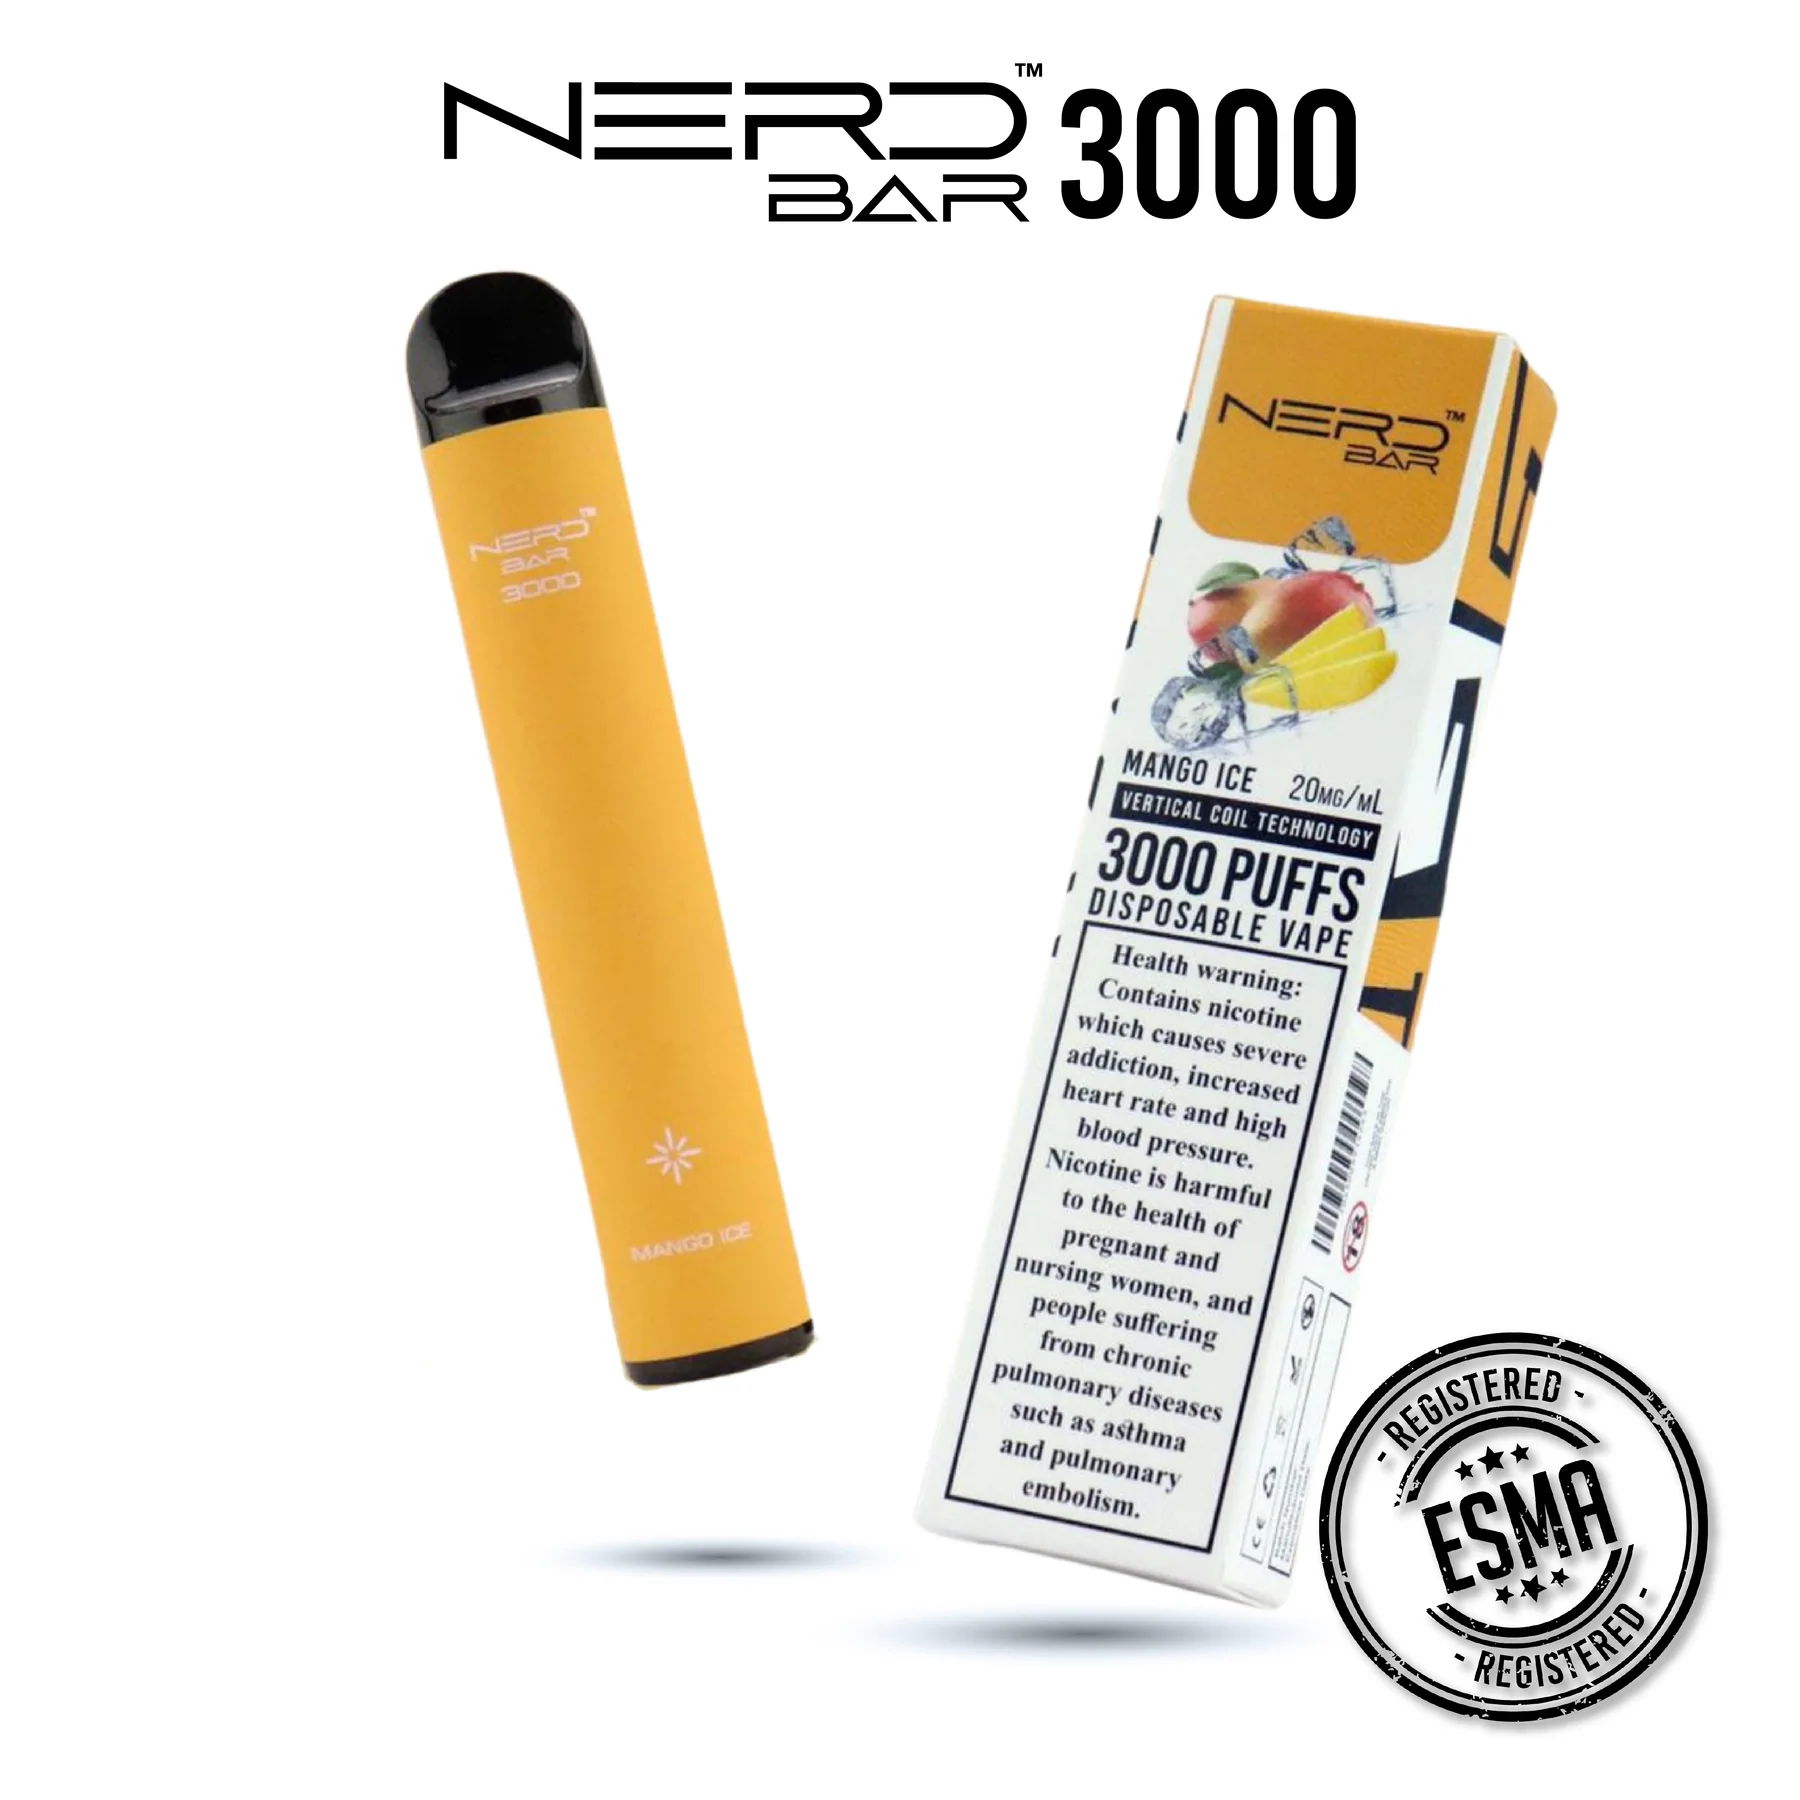 NERD Bar 3000 Mango Ice 20mg